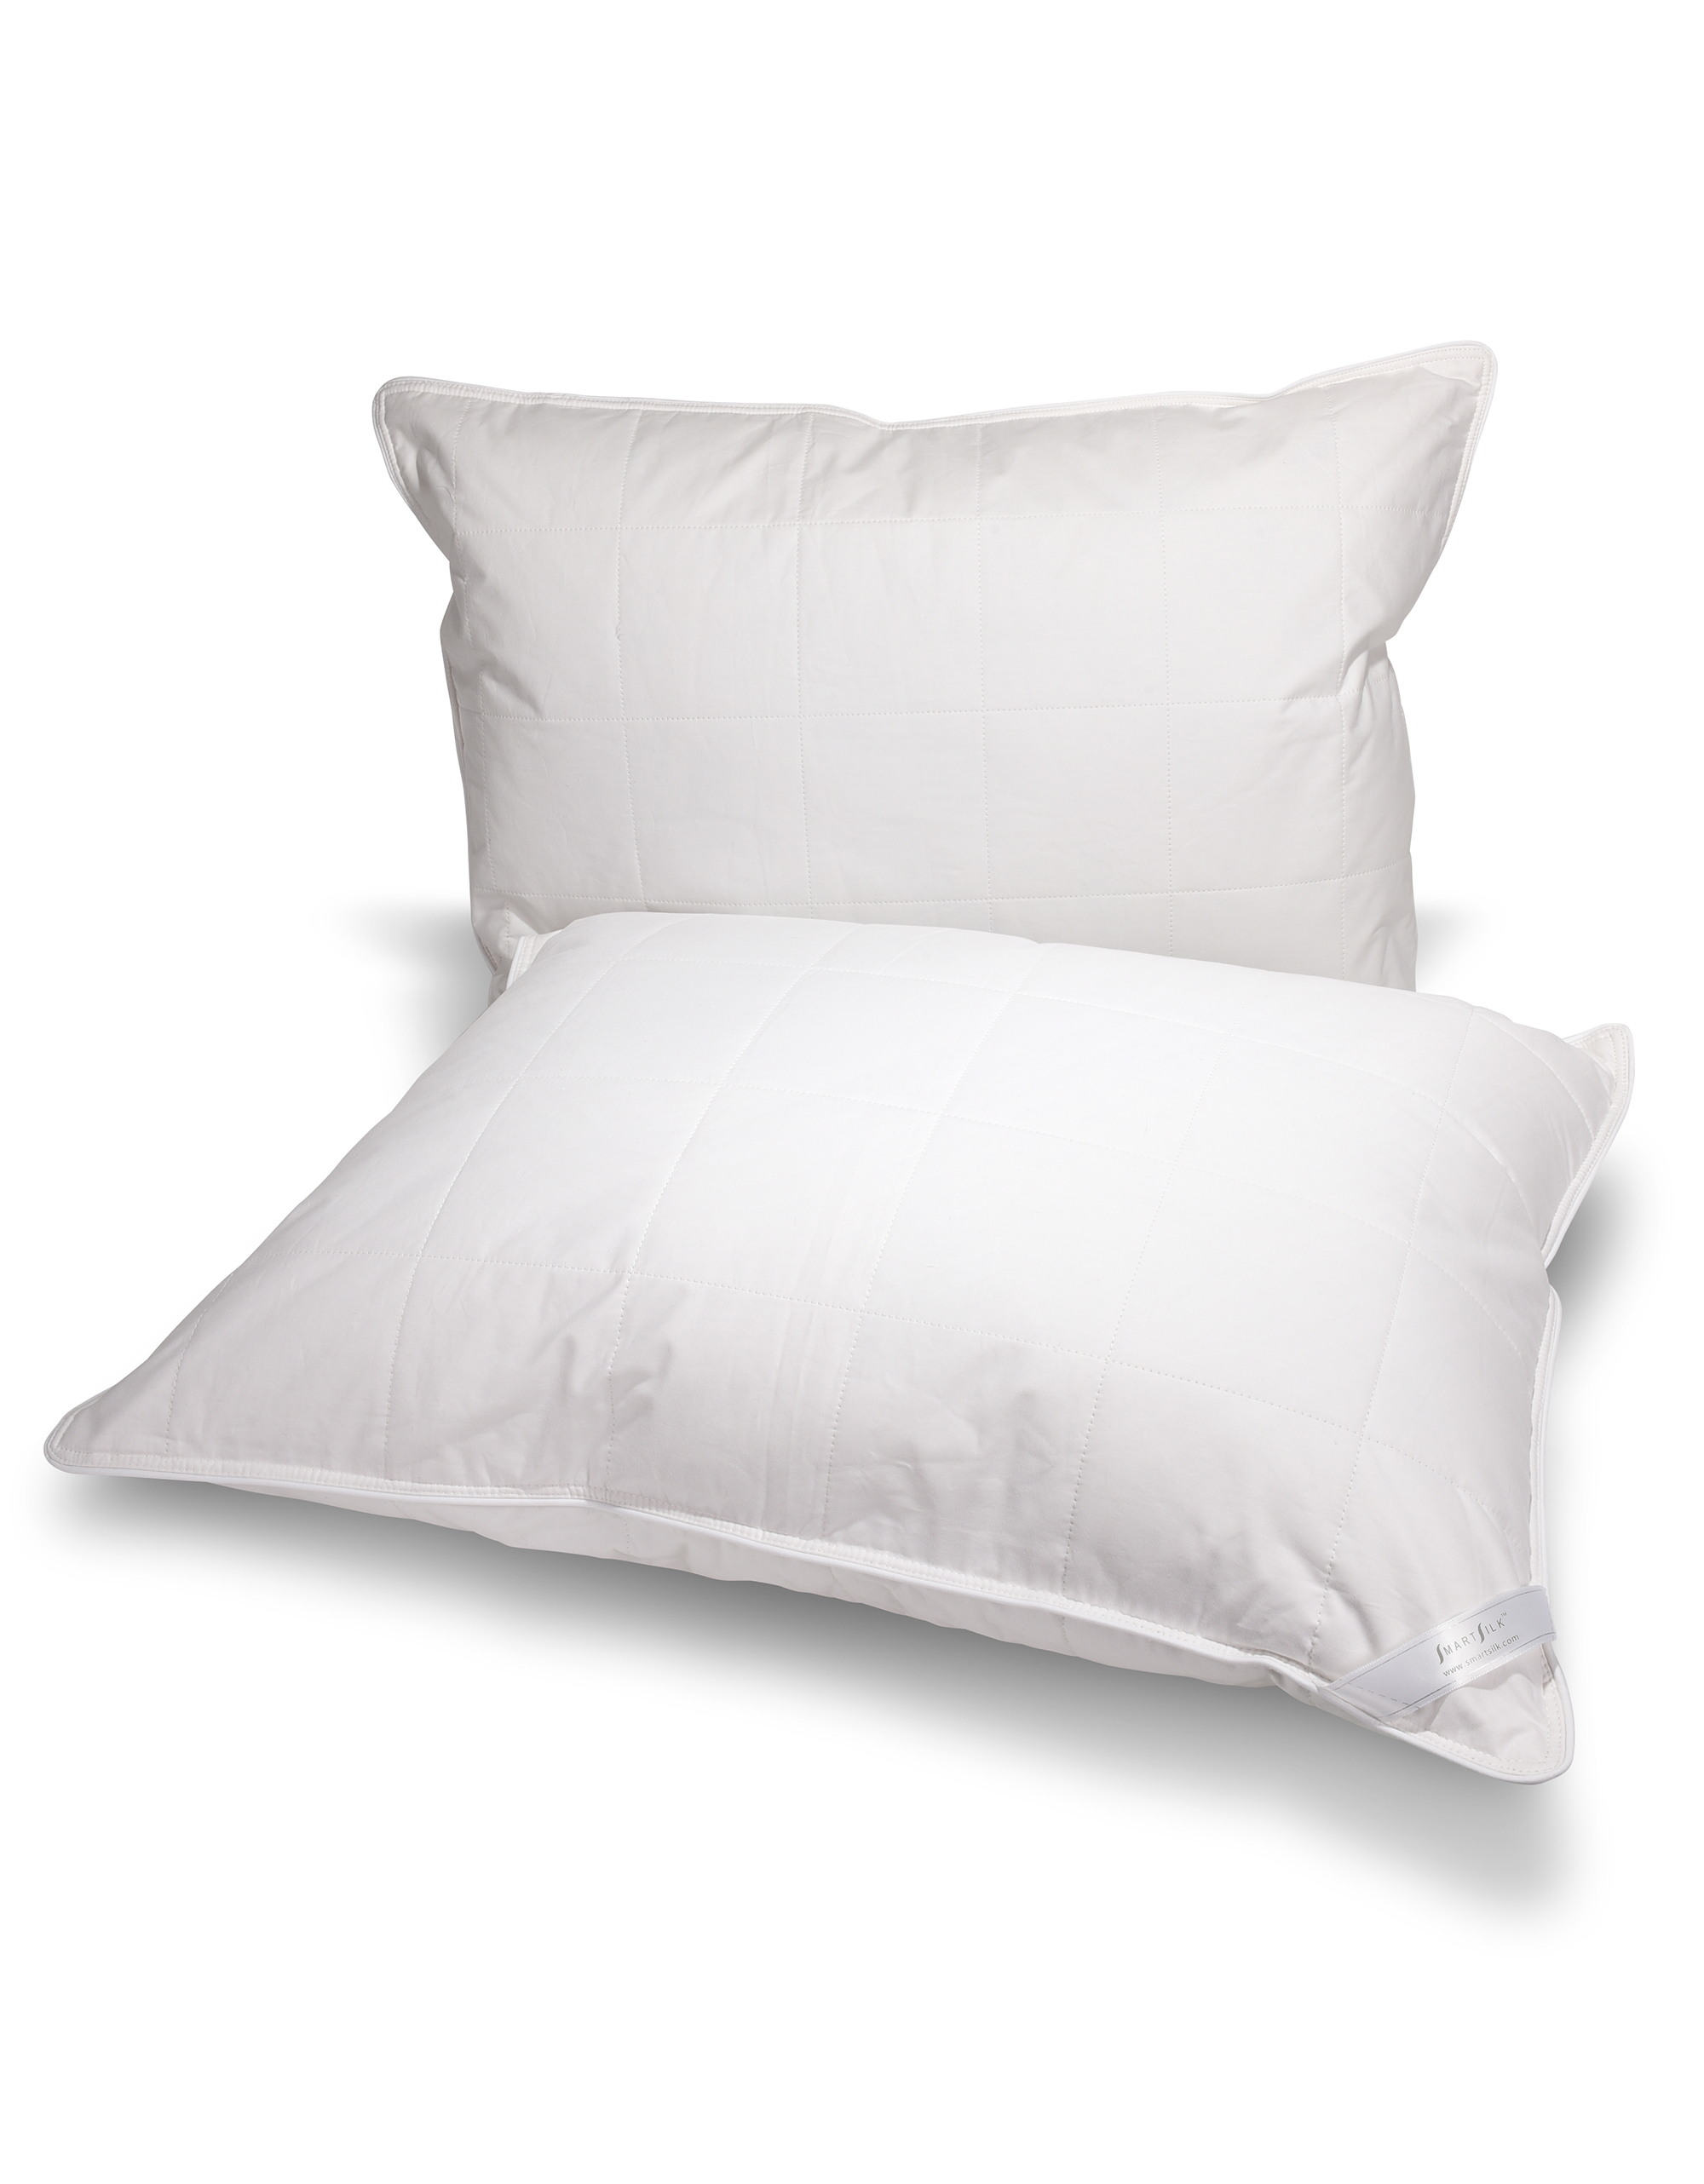 64122-l2 Pillow Comfort Level 2 - Queen